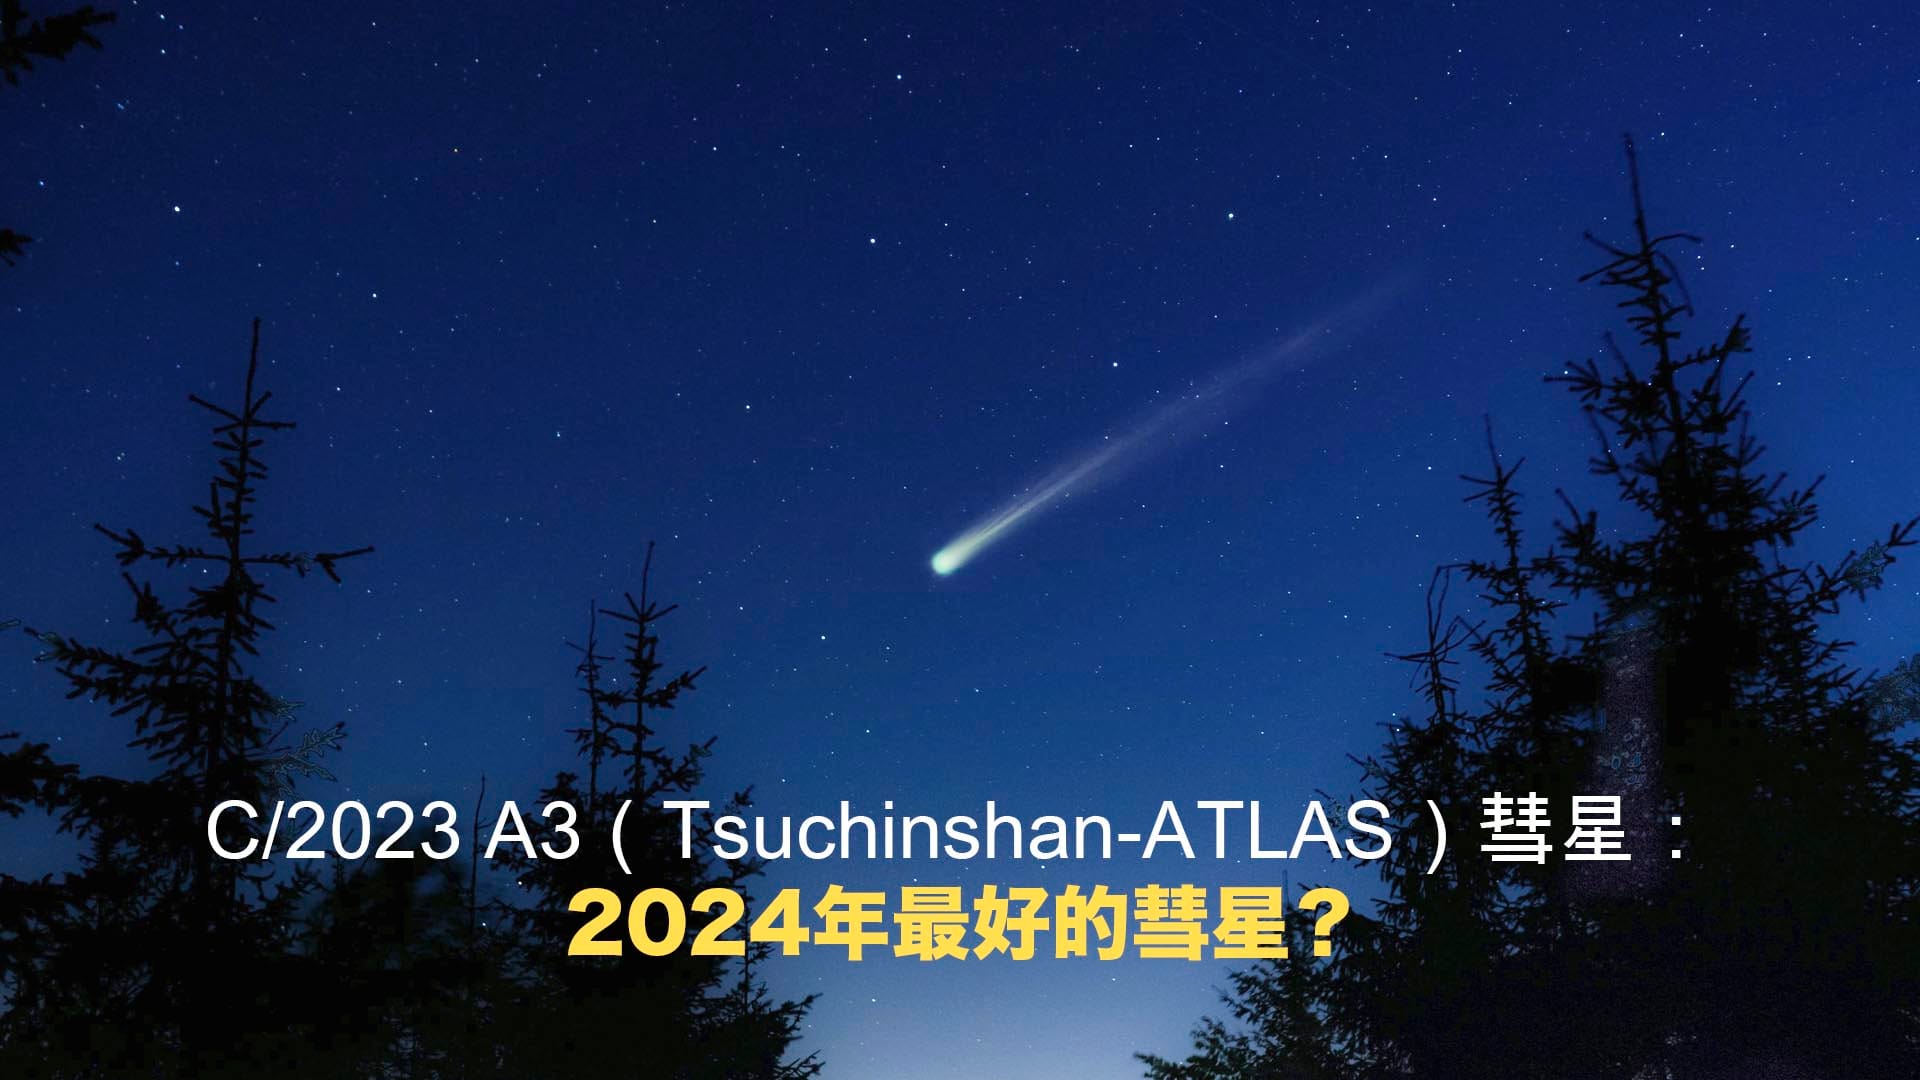 C/2023 A3 (Tsuchinshan-ATLAS): best comet 2024?